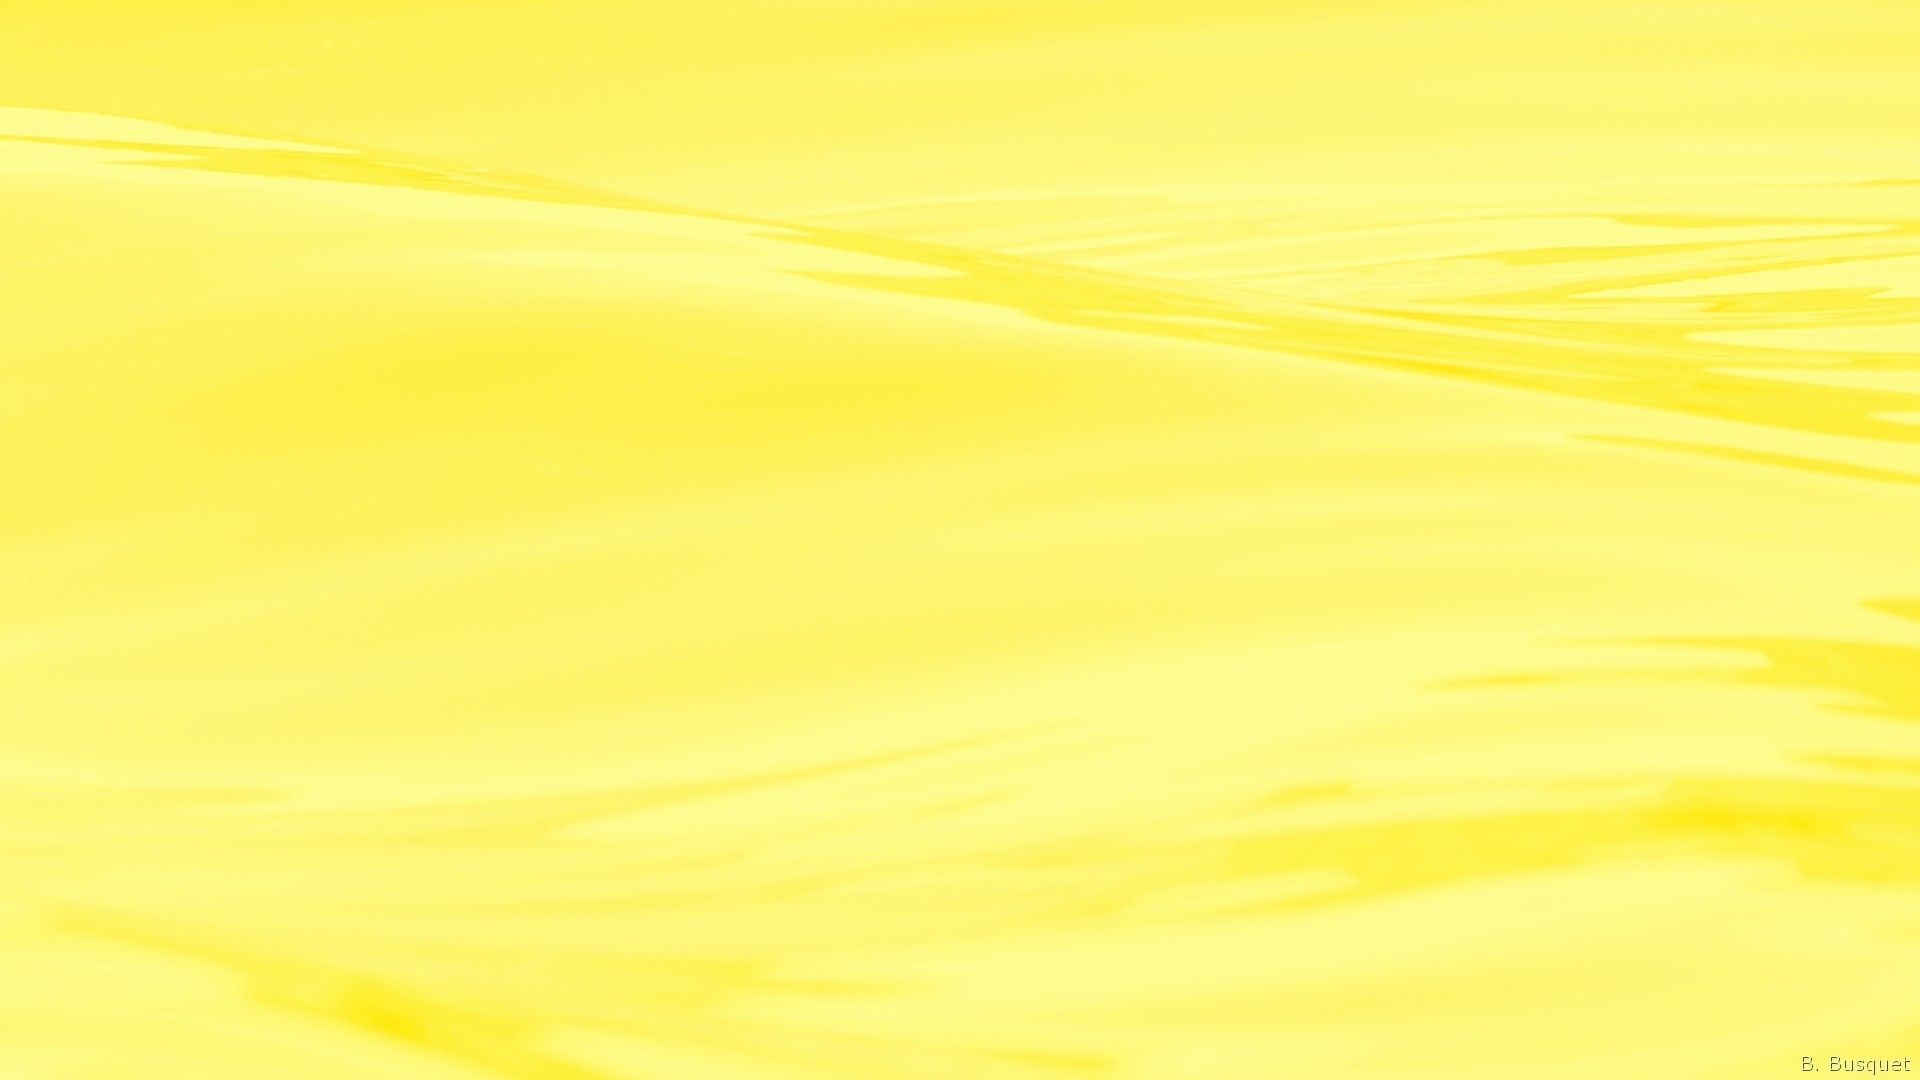 Light Yellow Background Images - Free Download on Freepik